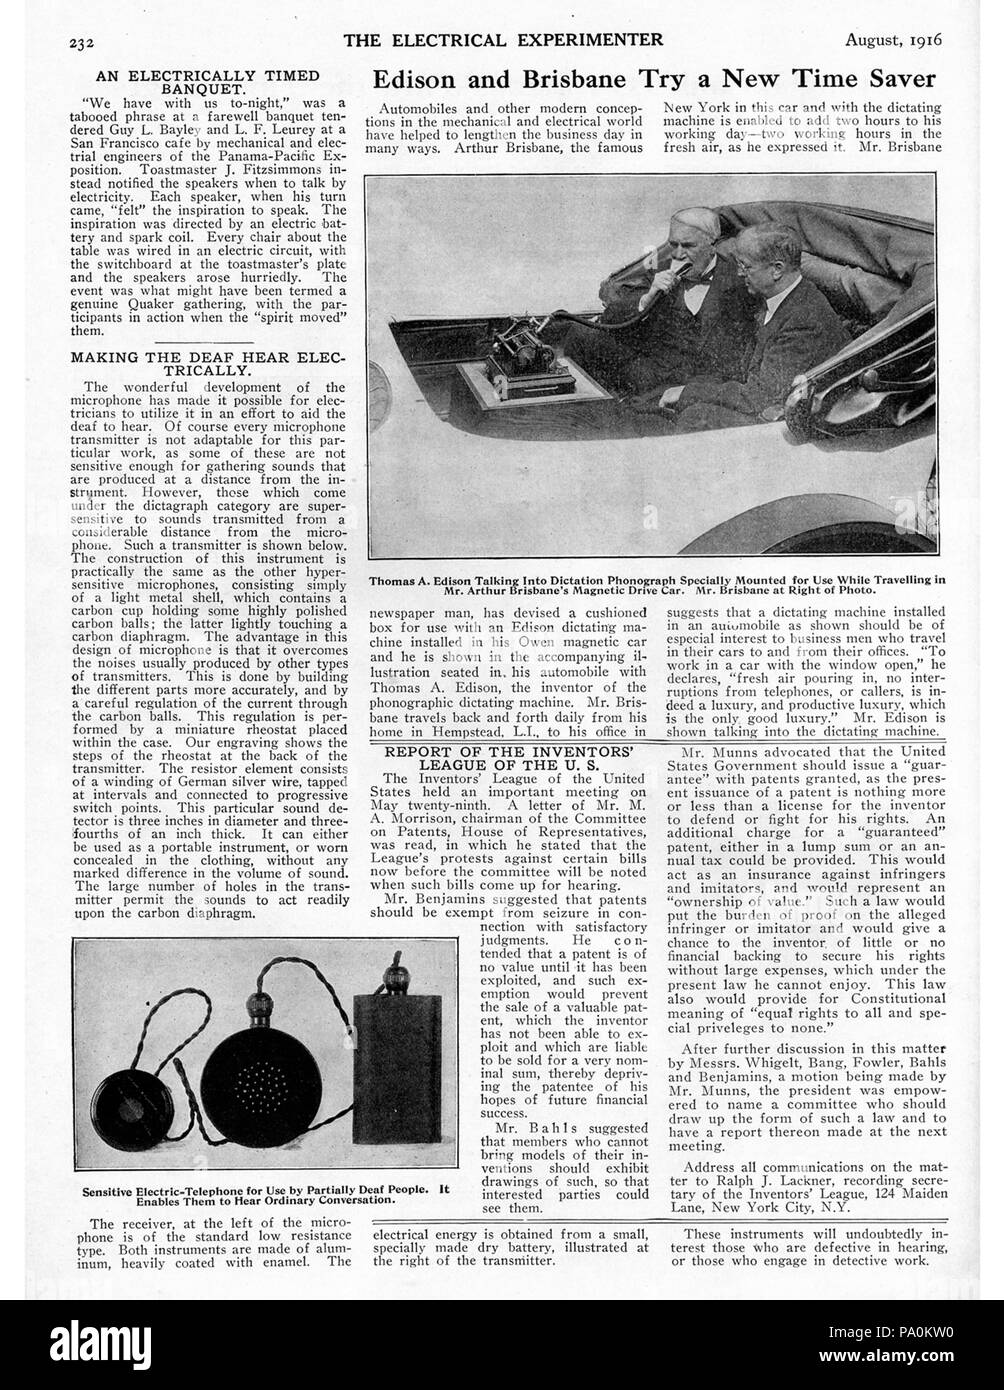 613 Elektrische Experimenter Aug 1916 pg232 Stockfoto